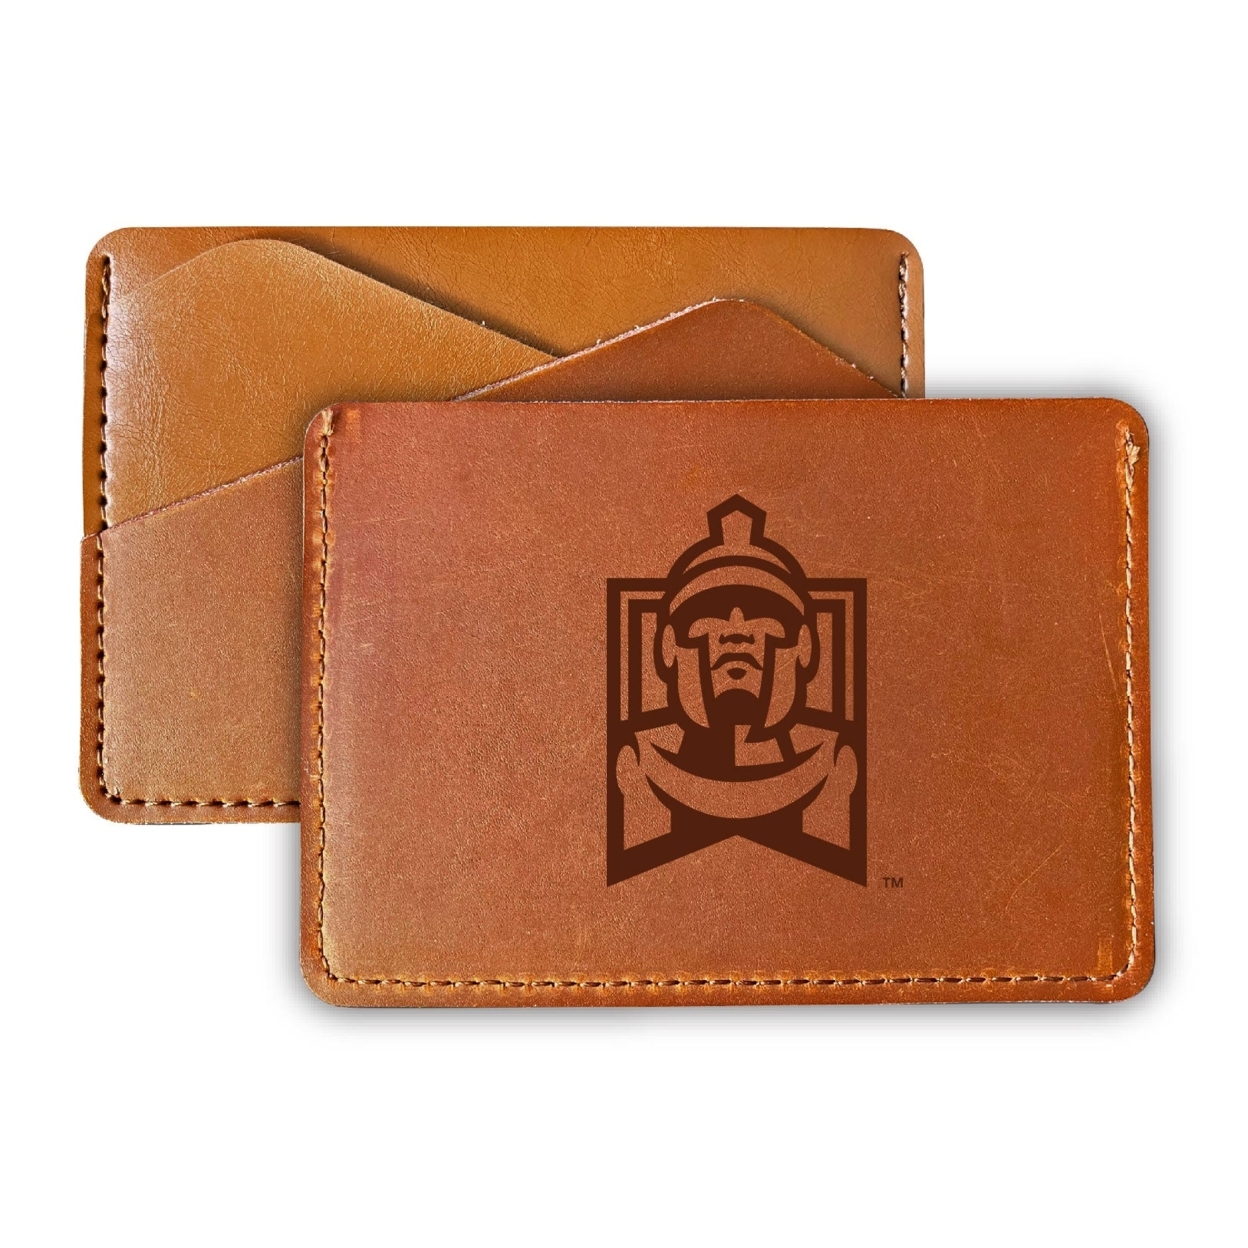 East Stroudsburg University College Leather Card Holder Wallet